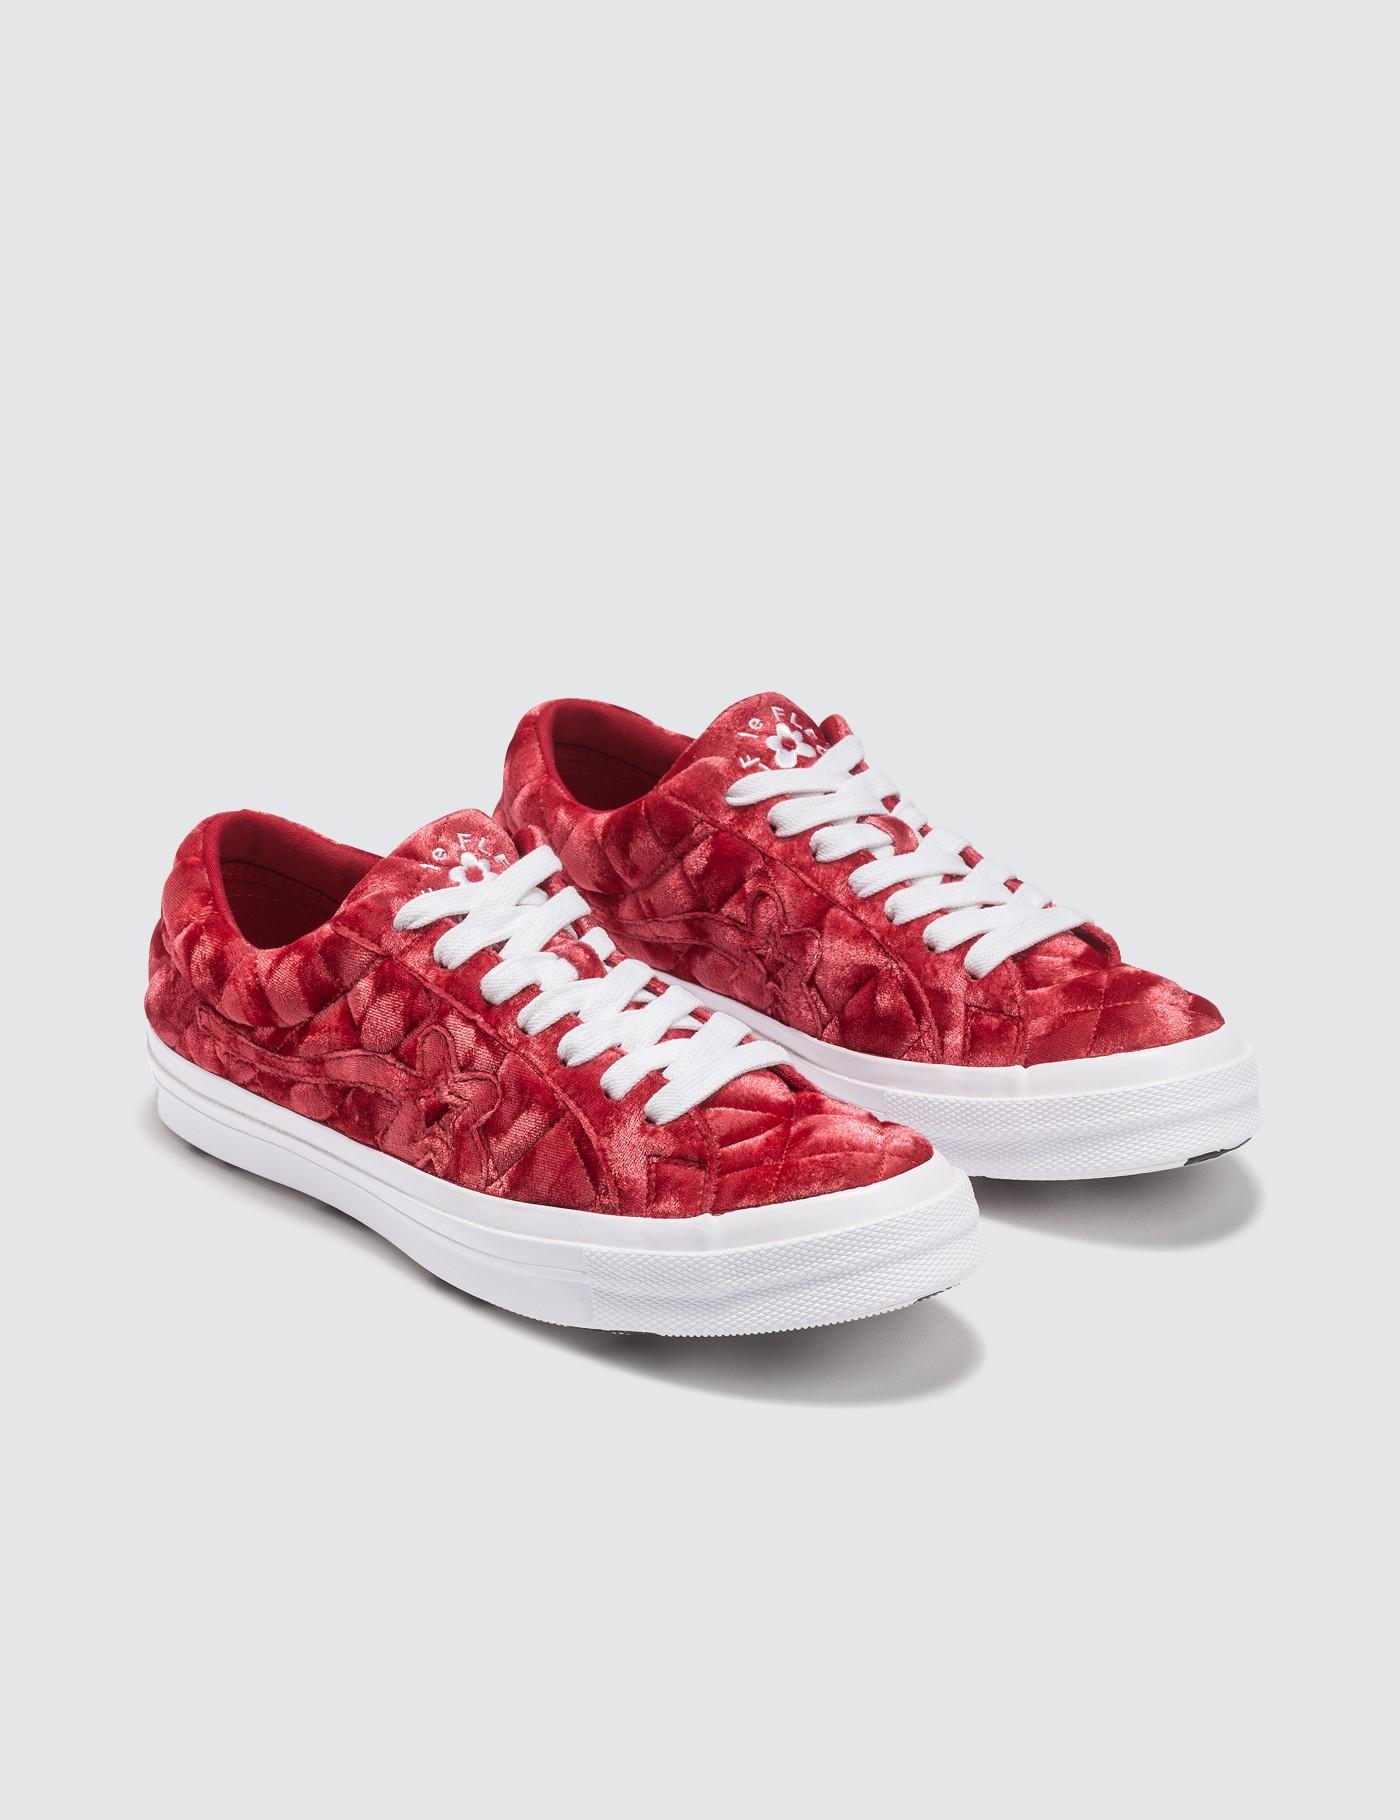 Converse Velvet Golf Le Fleur Sneakers in Red for Men - Lyst